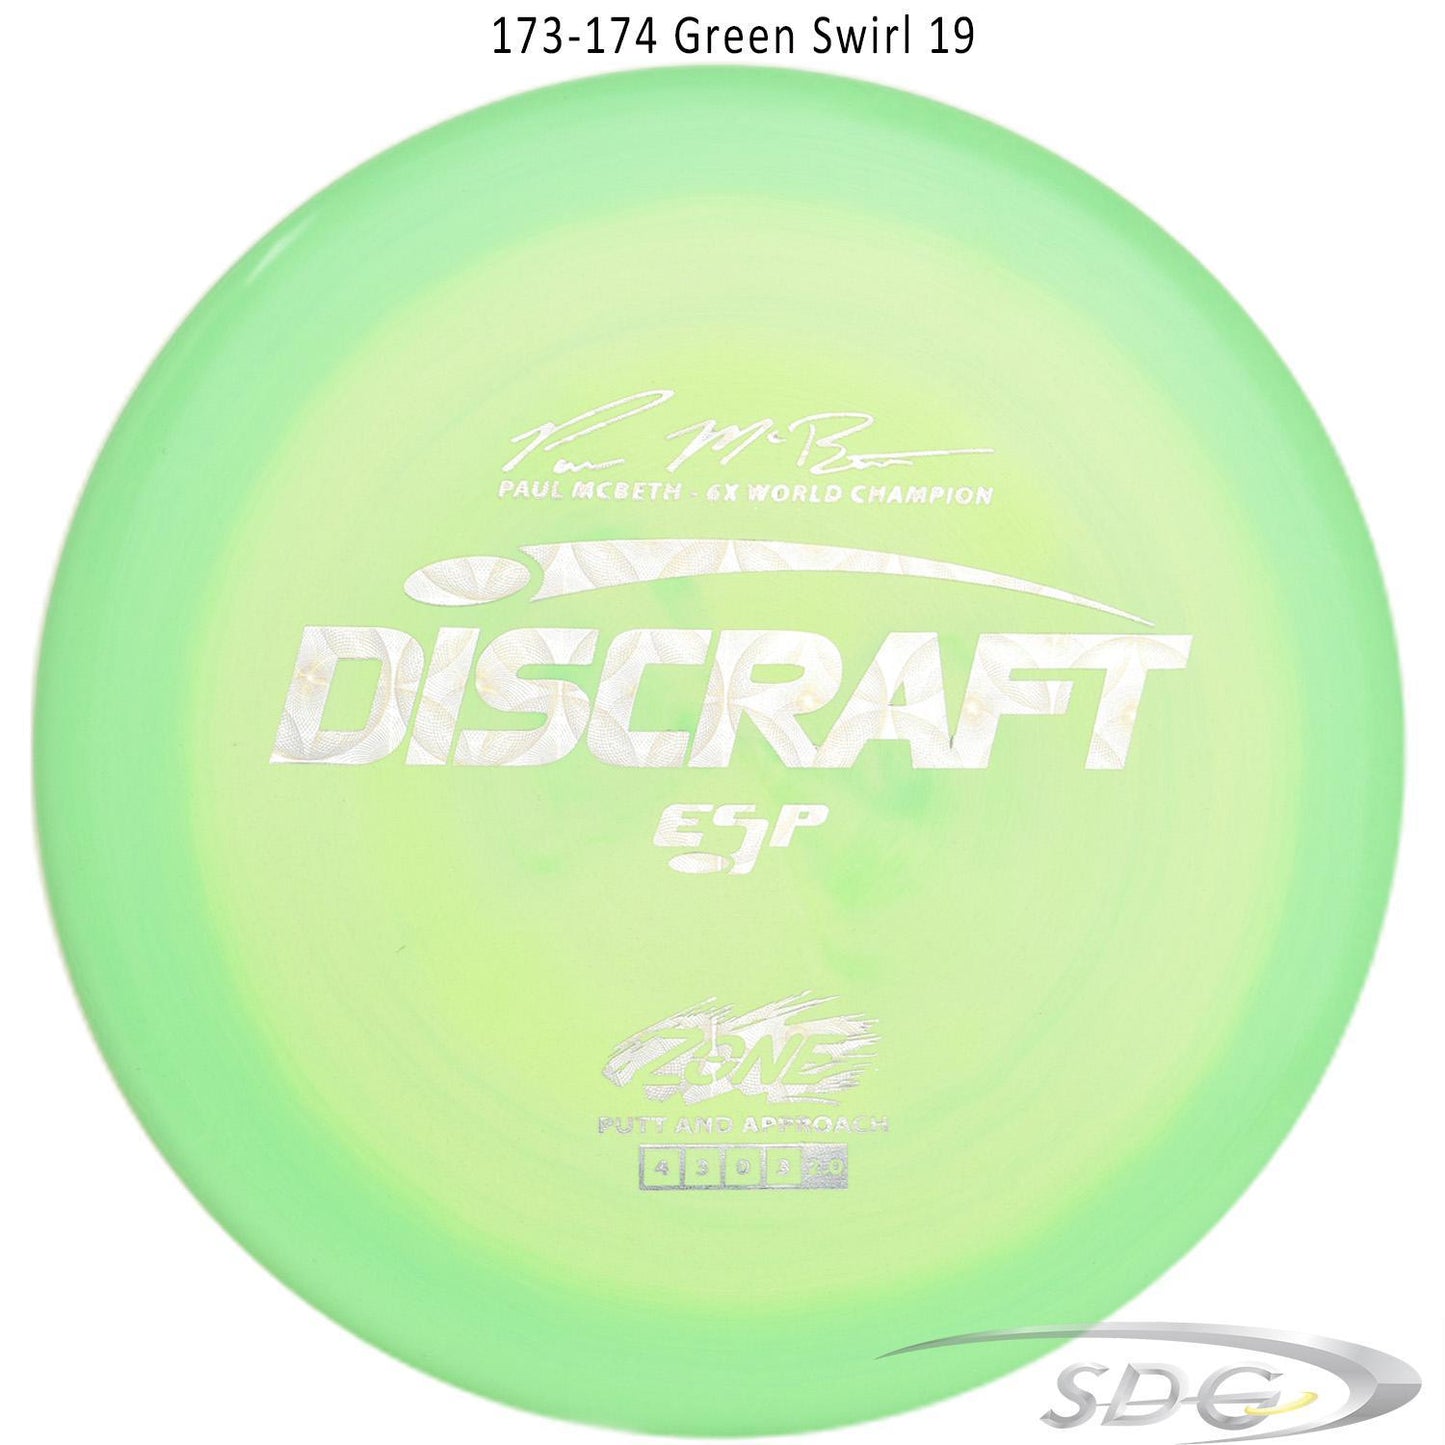 discraft-esp-zone-paul-mcbeth-signature-series-disc-golf-putter-176-173-weights 173-174 Green Swirl 19 